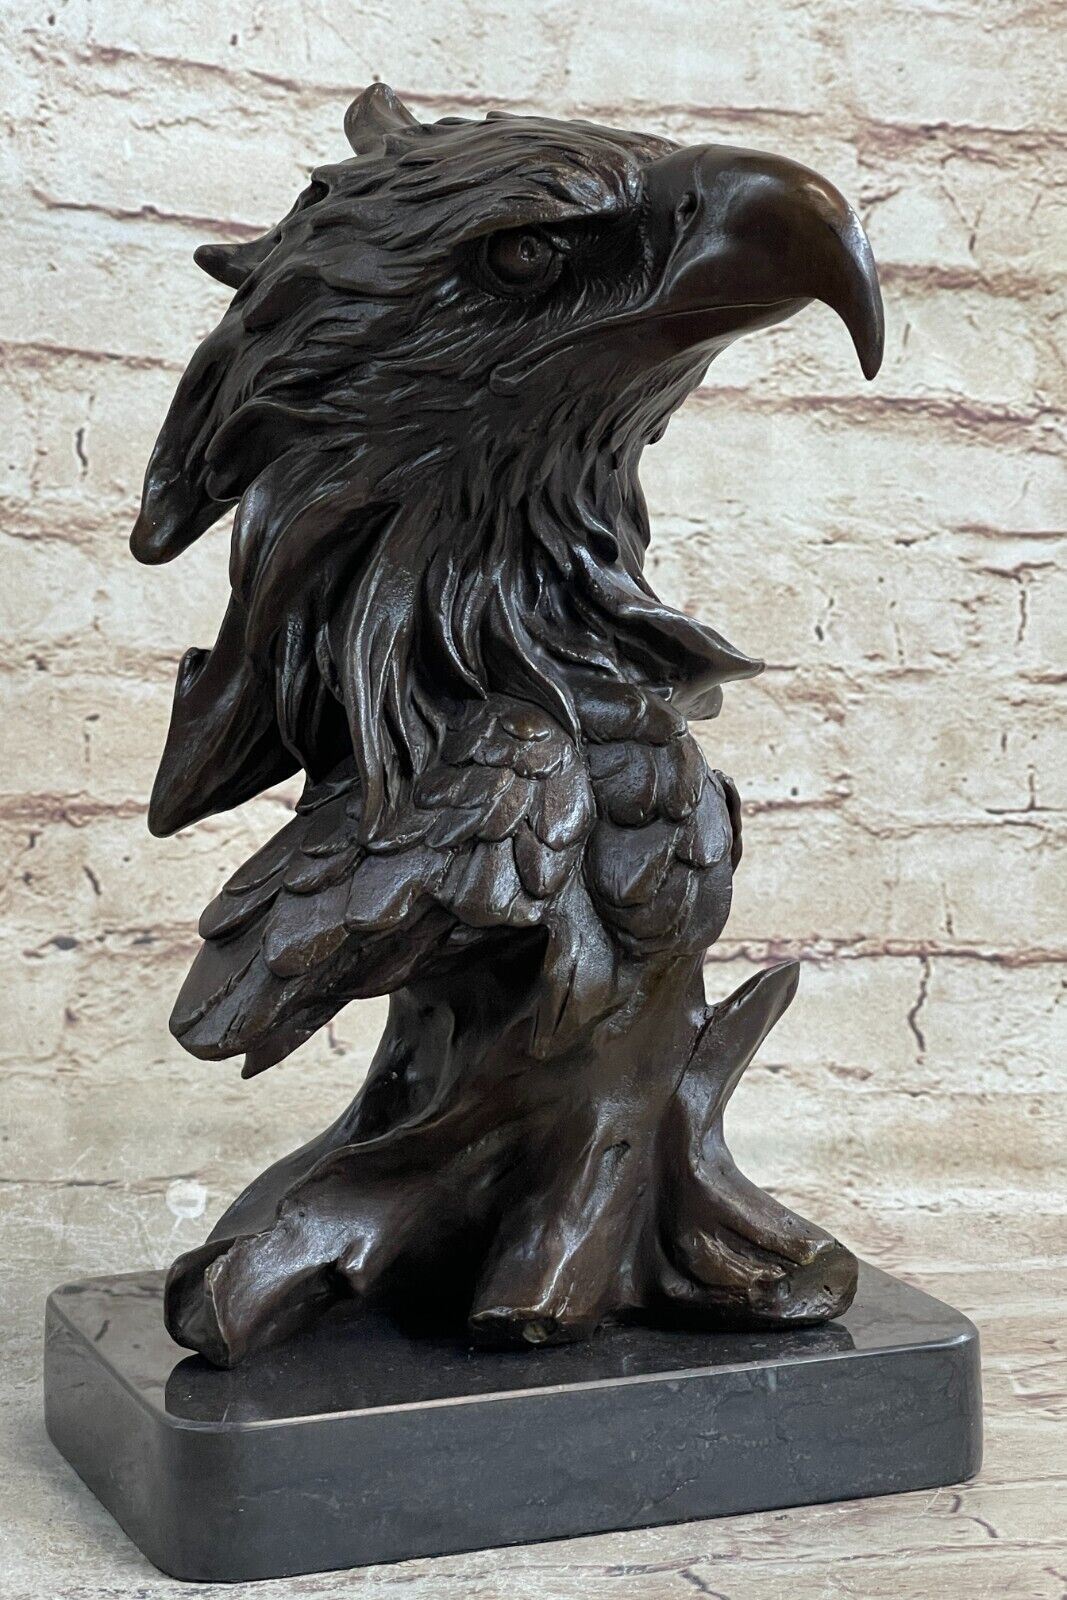 Art Deco Bald American Eagle Bust Bronze Sculpture on Marble Base Figurine Deal